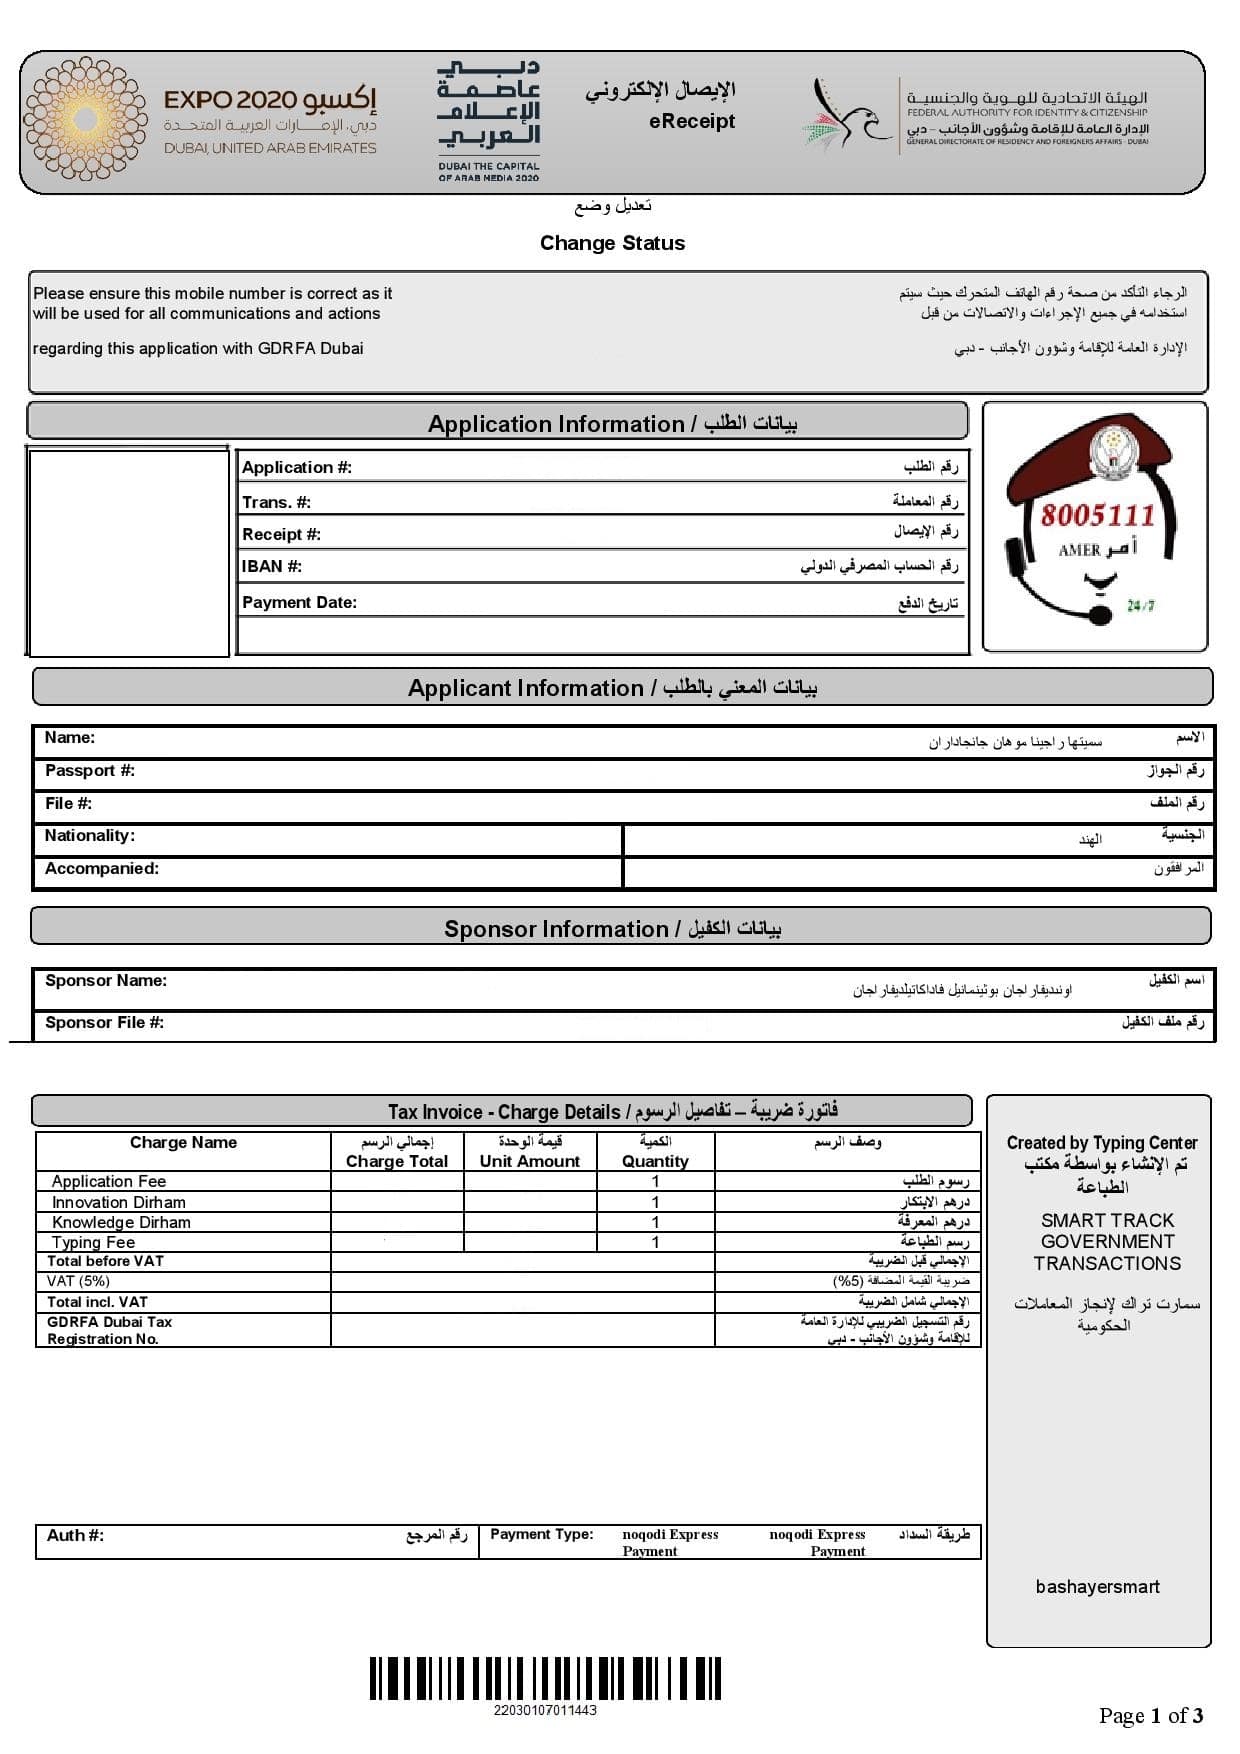 Sample Dubai status change application